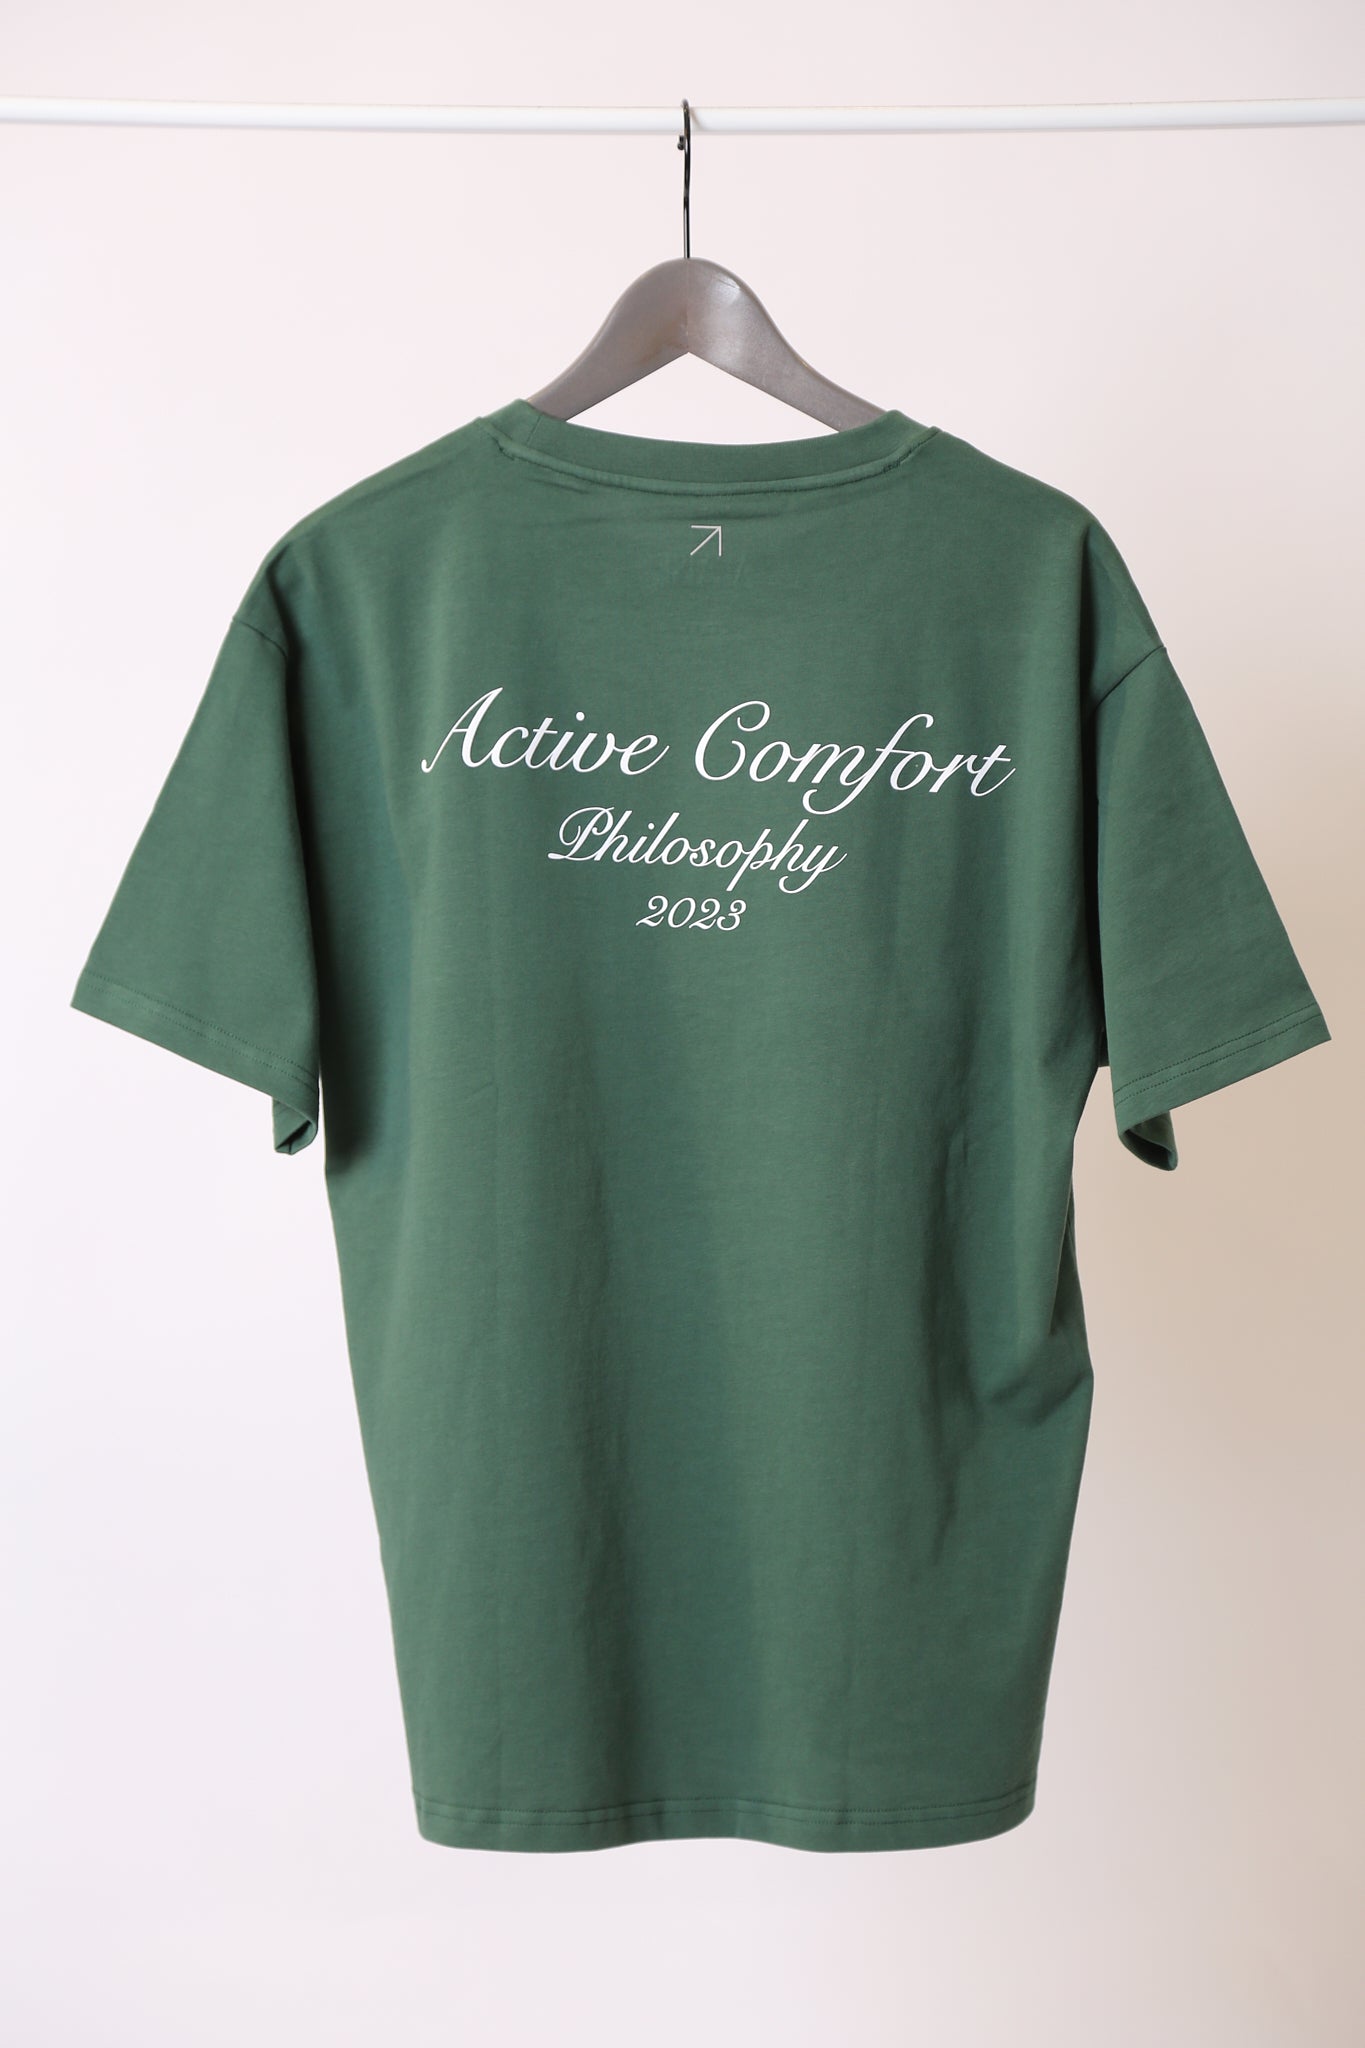 Alaise Philosophy Box Fit T-Shirt - Green